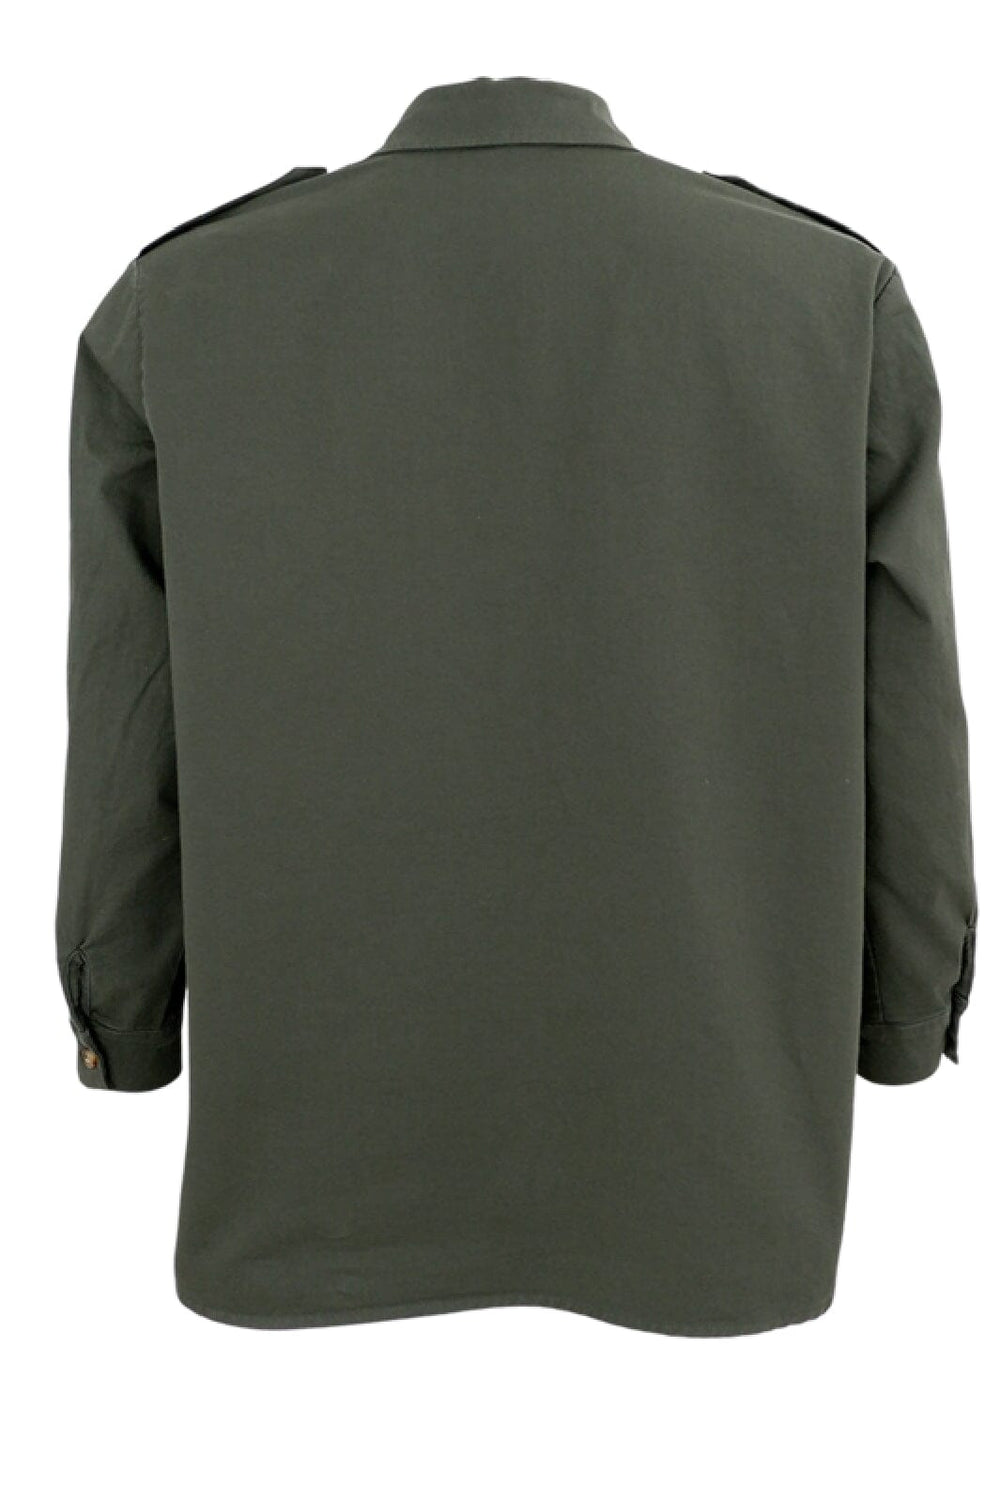 Forudbestilling - Black Colour - Bccanvas Oversize Shirt/Jacket - AR Army Skjorter 